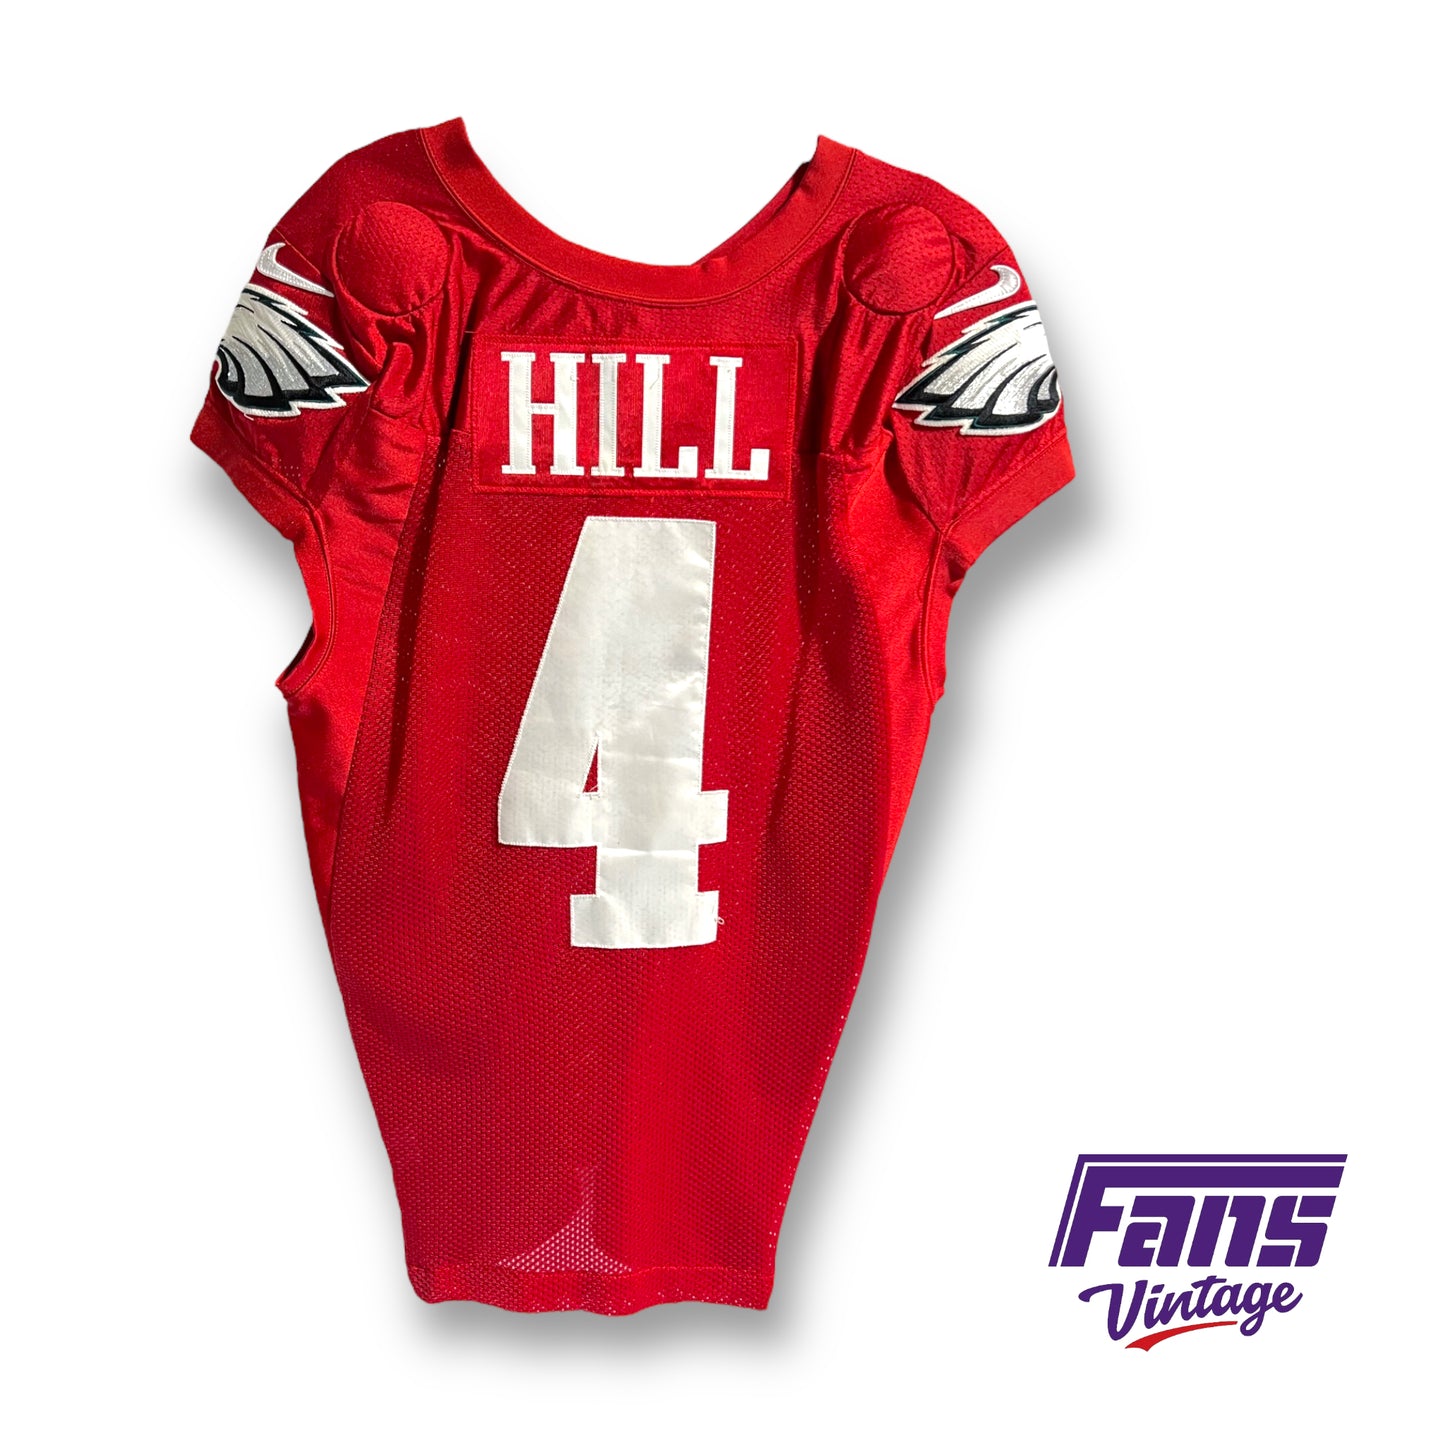 Kenny Hill Philadelphia Eagles practice worn jersey